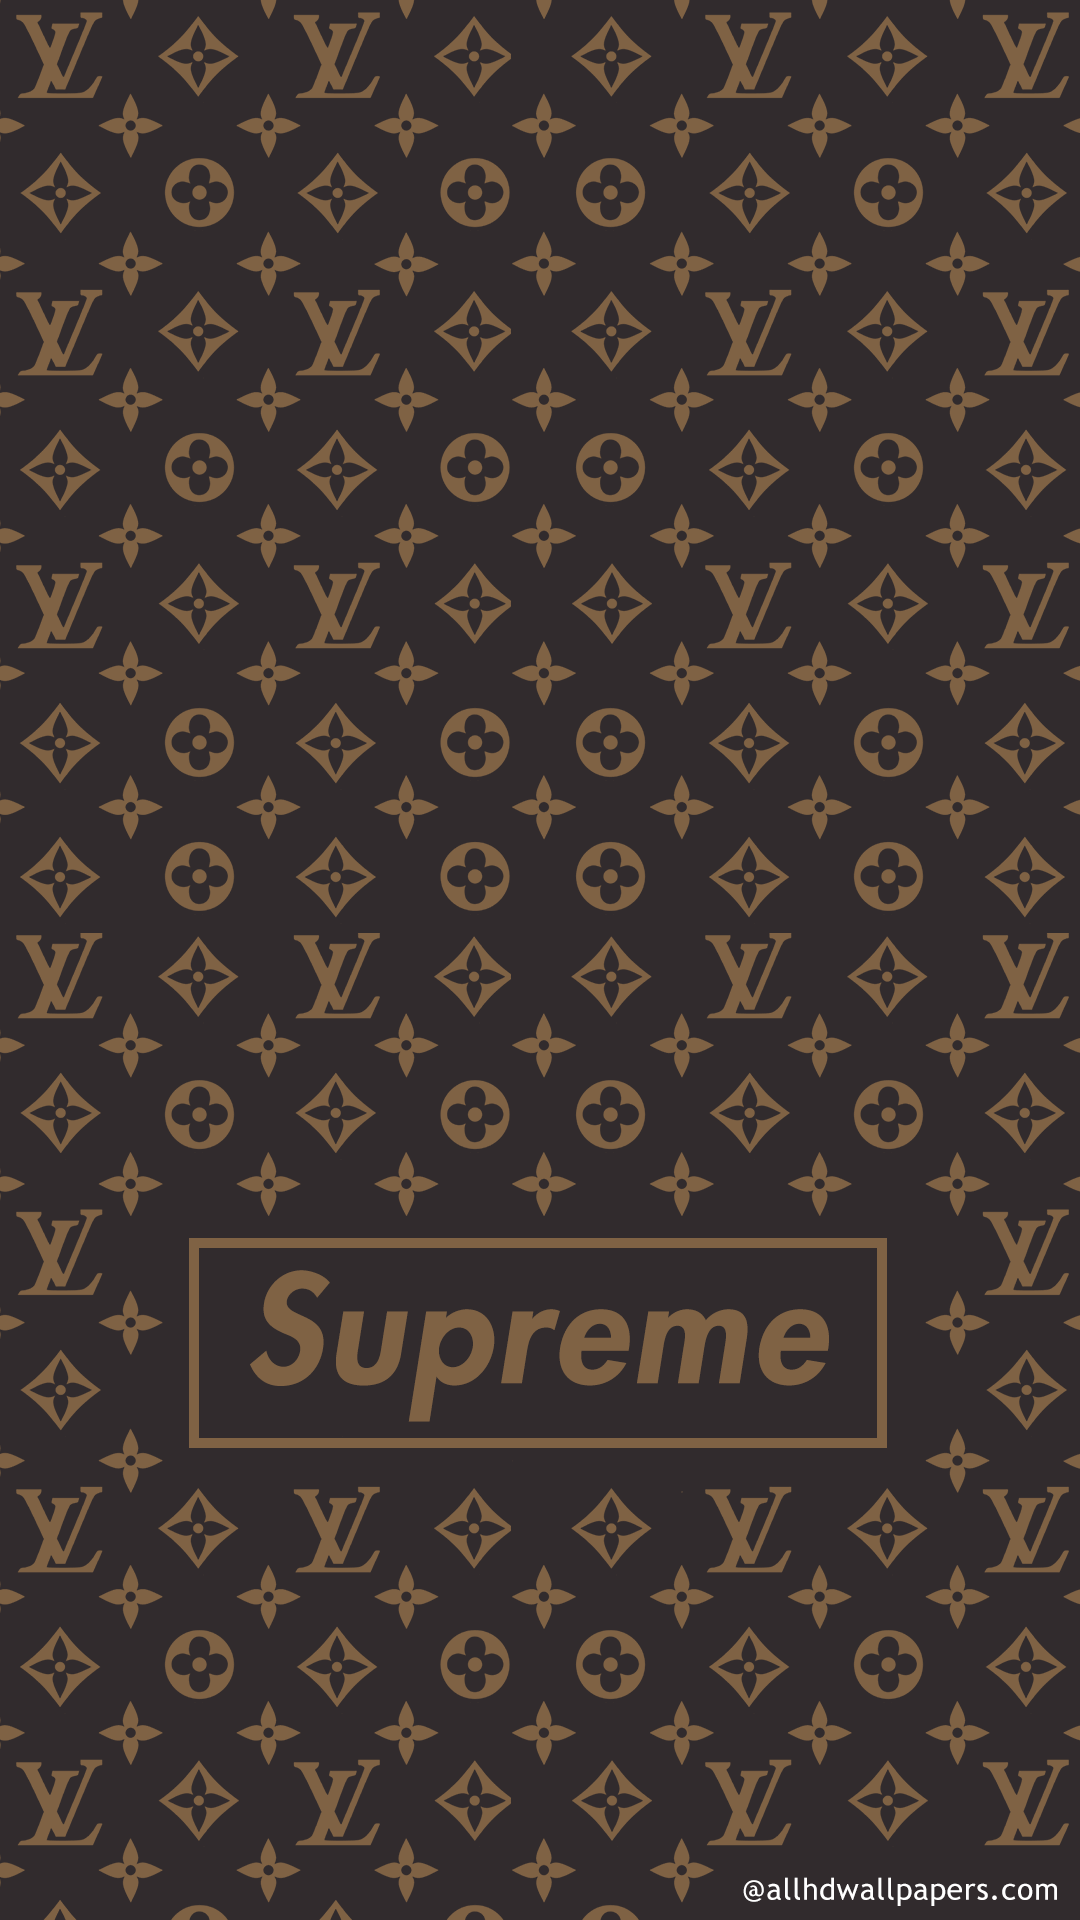 Supreme Wallpaper in 4K. Supreme iphone